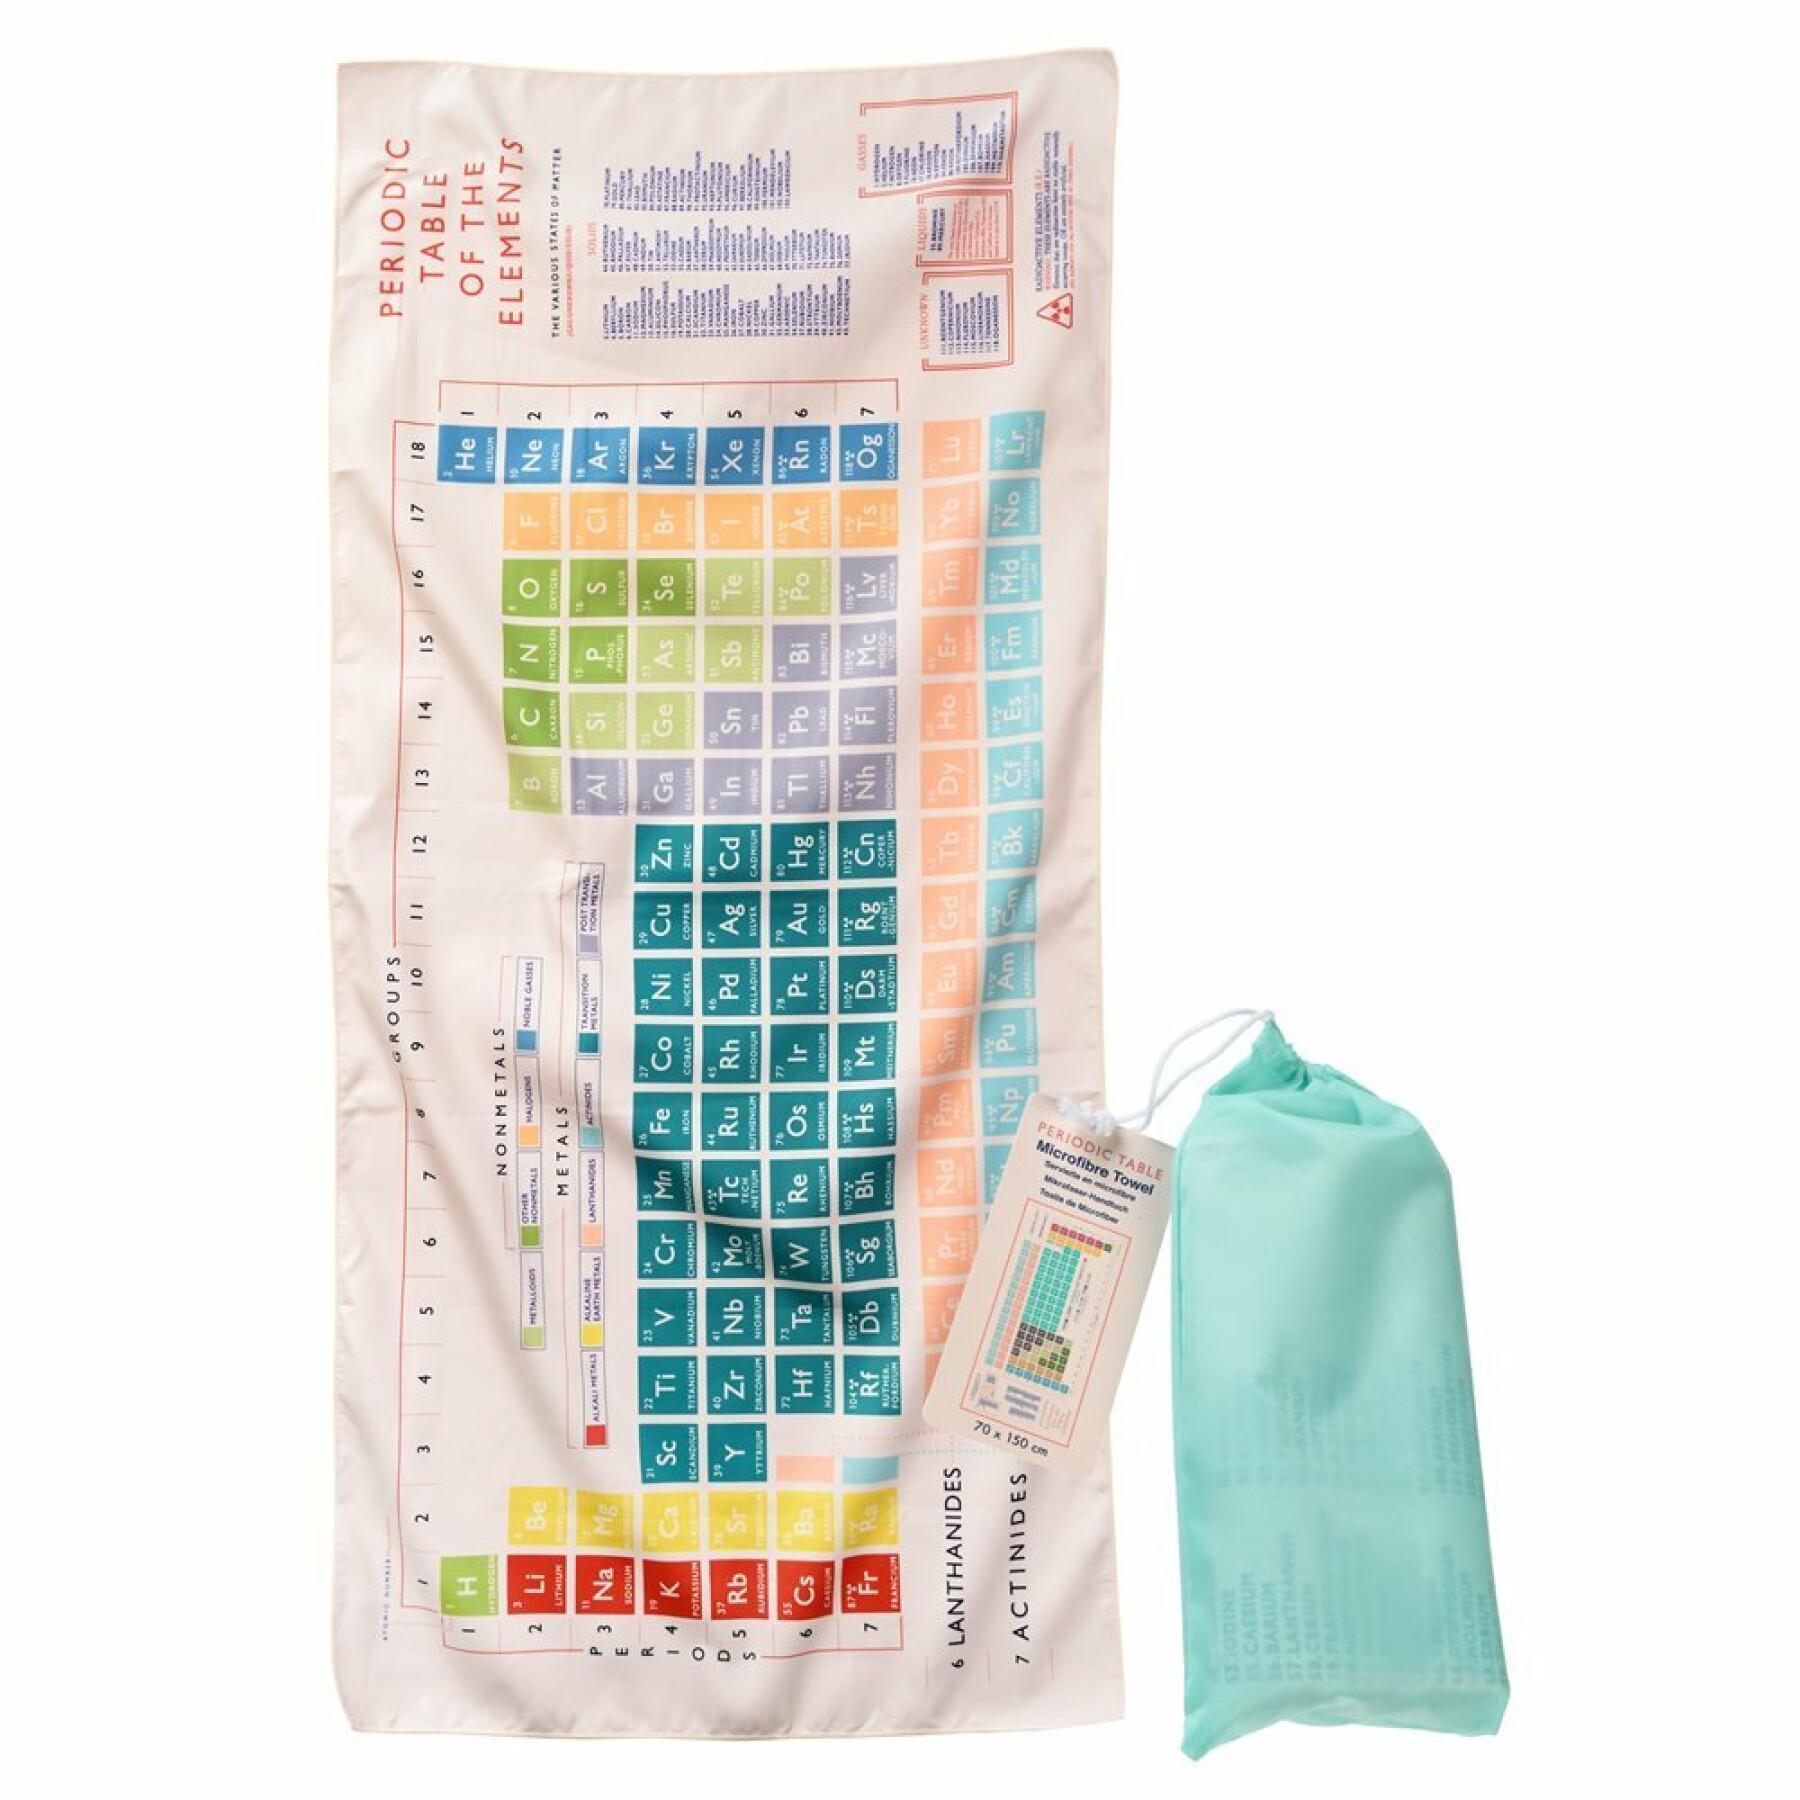 Microfiber towel for children Rex London Periodic Table